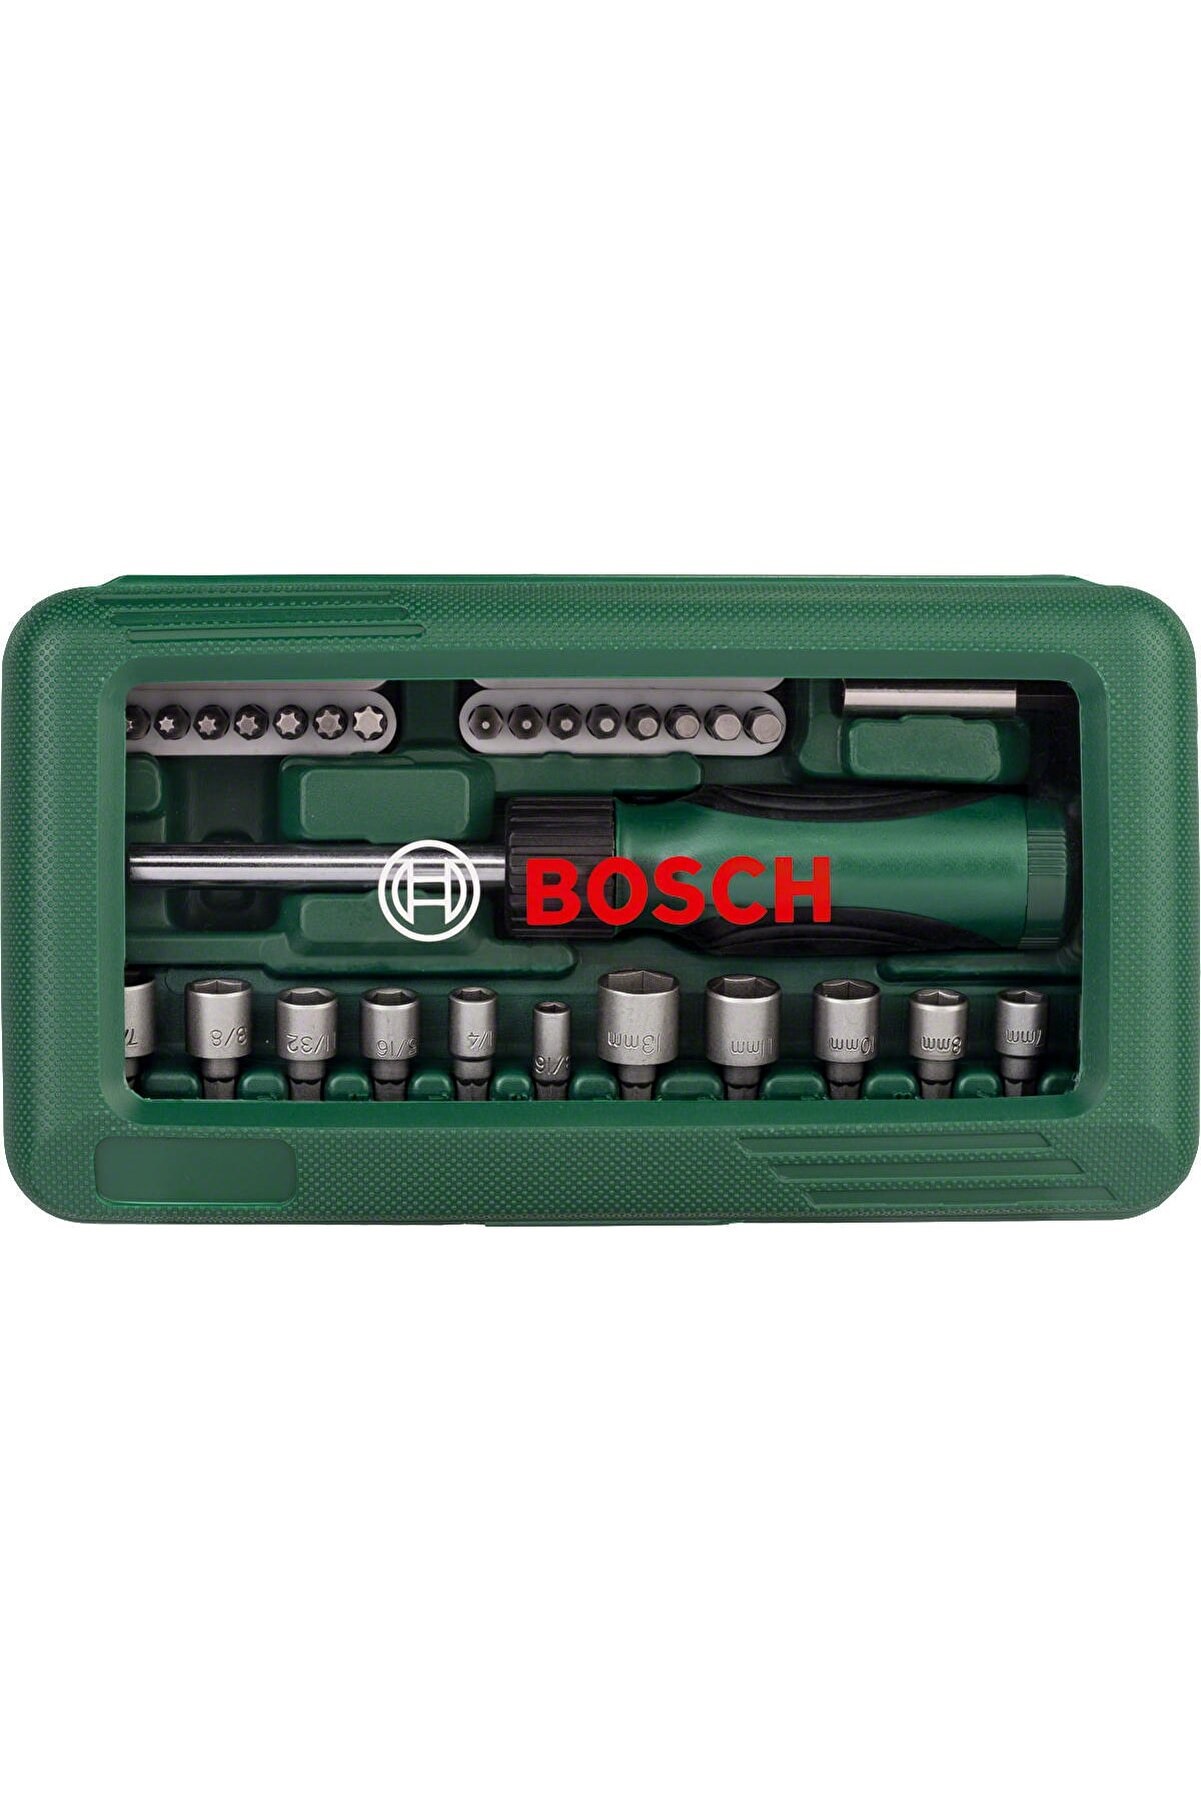 Bosch%2046%20Parça%20Akıllı%20Tornavida%20Seti